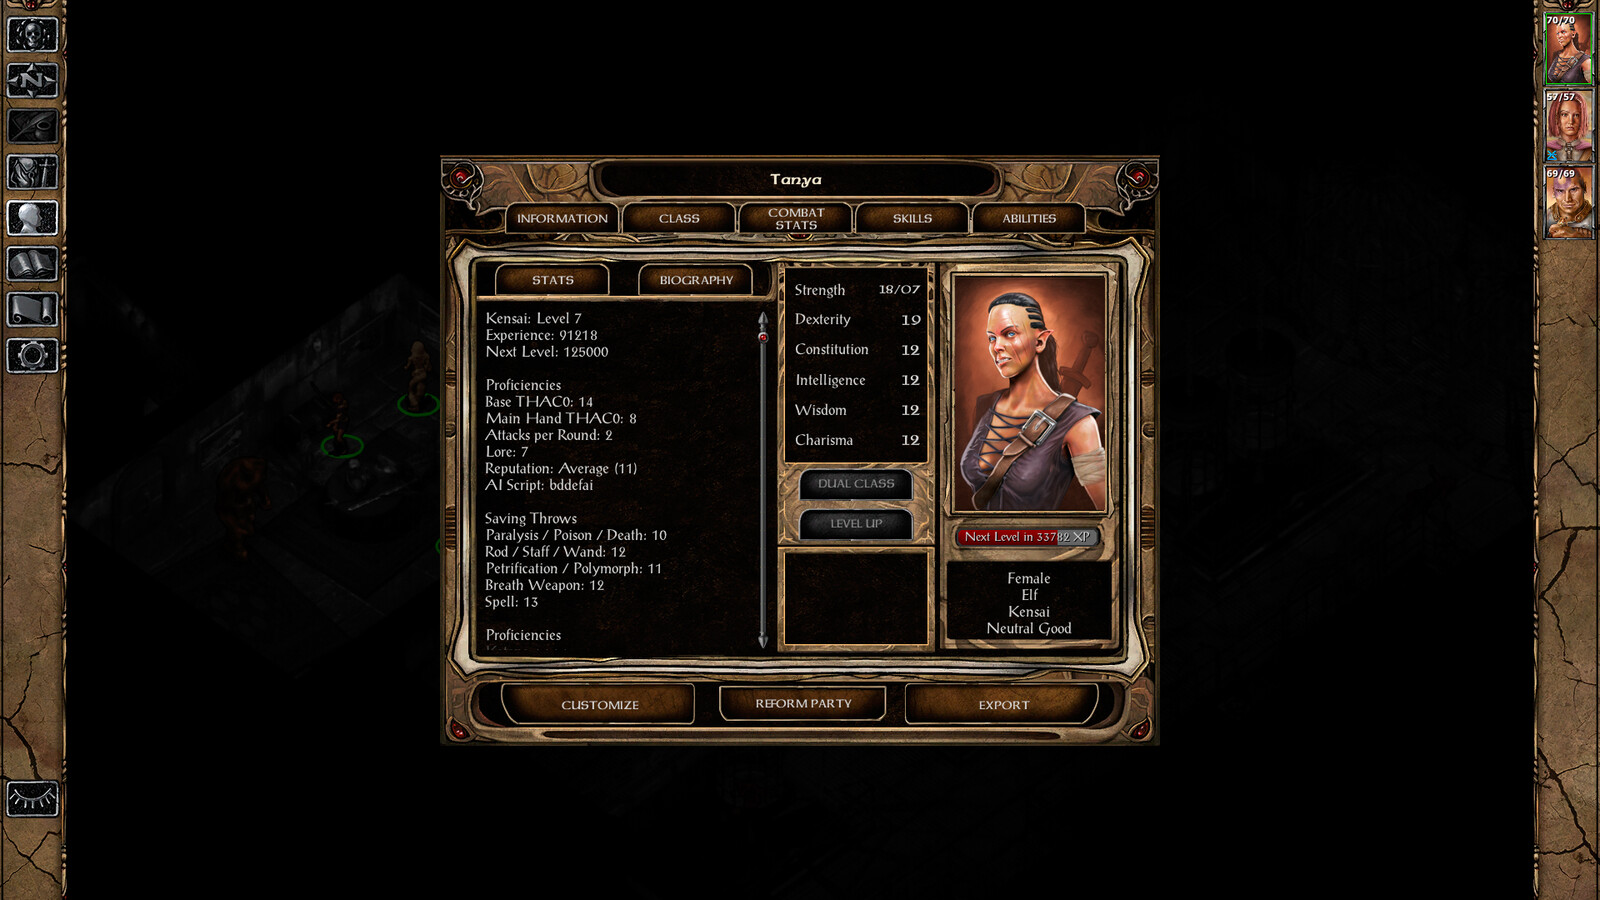 In game screen shot from Baldur's Gate 2.